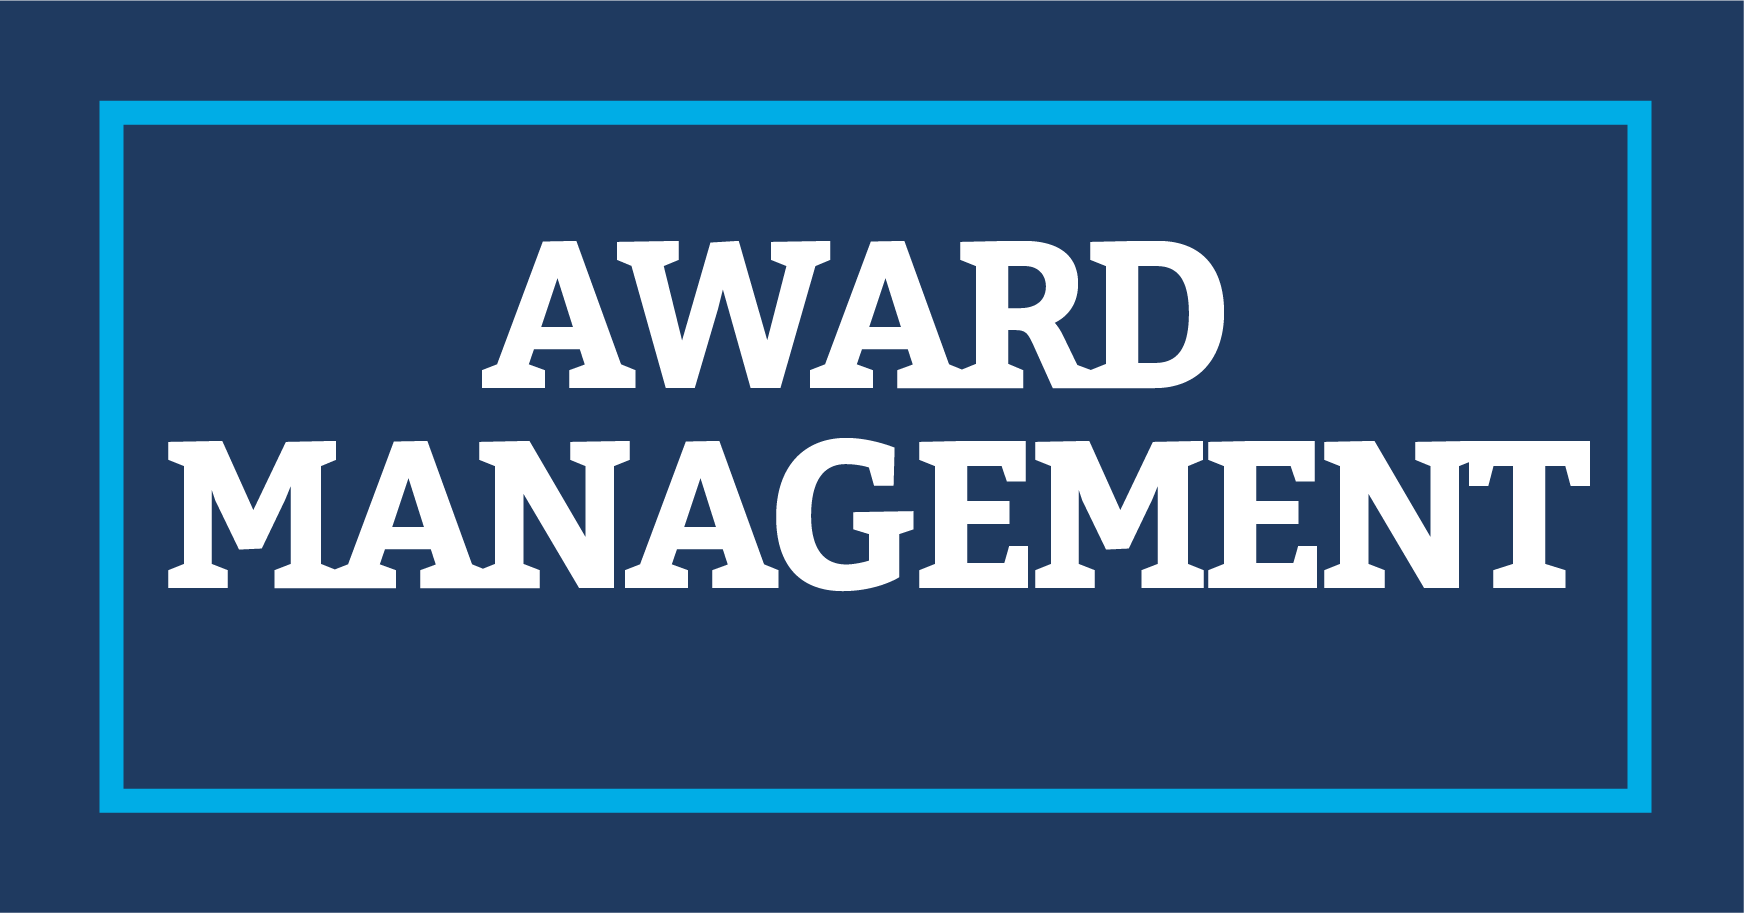 Award Management